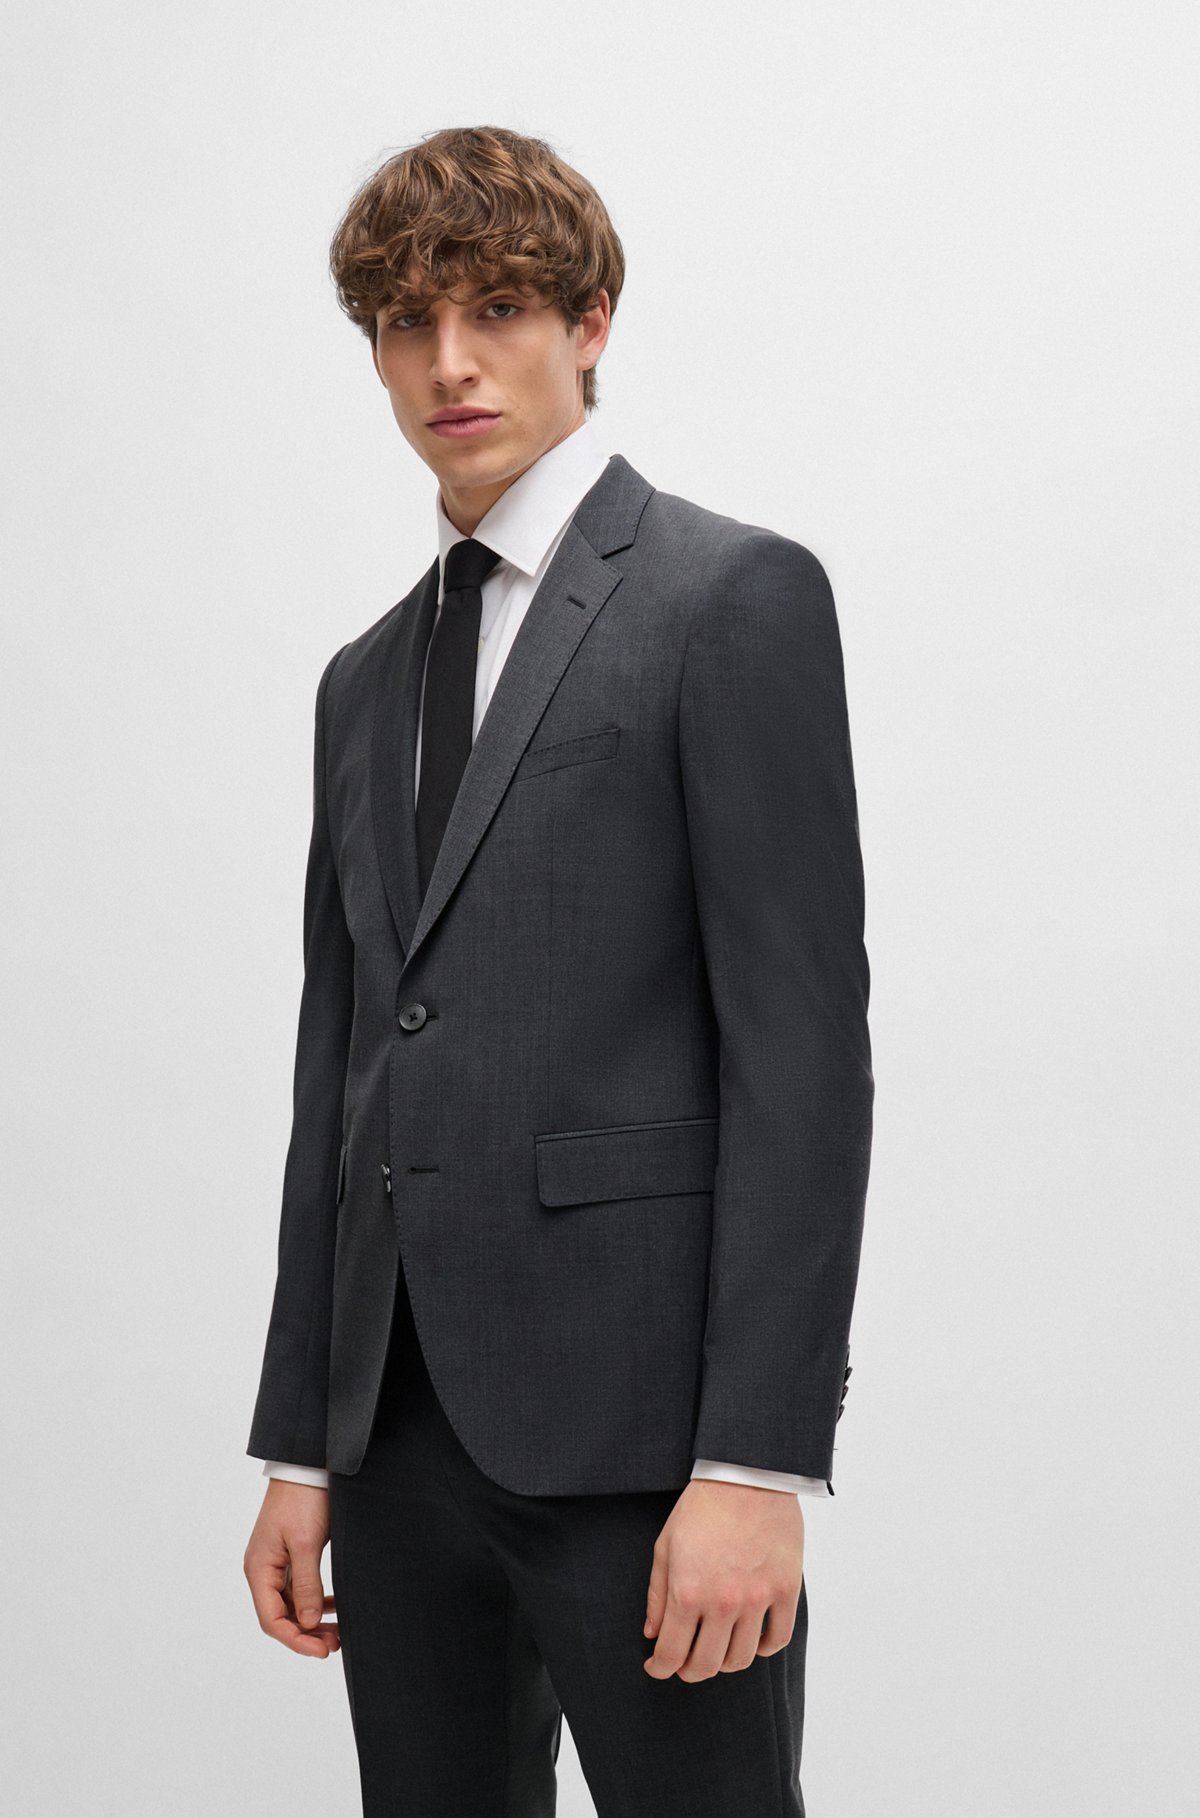 BOSS - Regular-fit suit in a melange virgin-wool blend